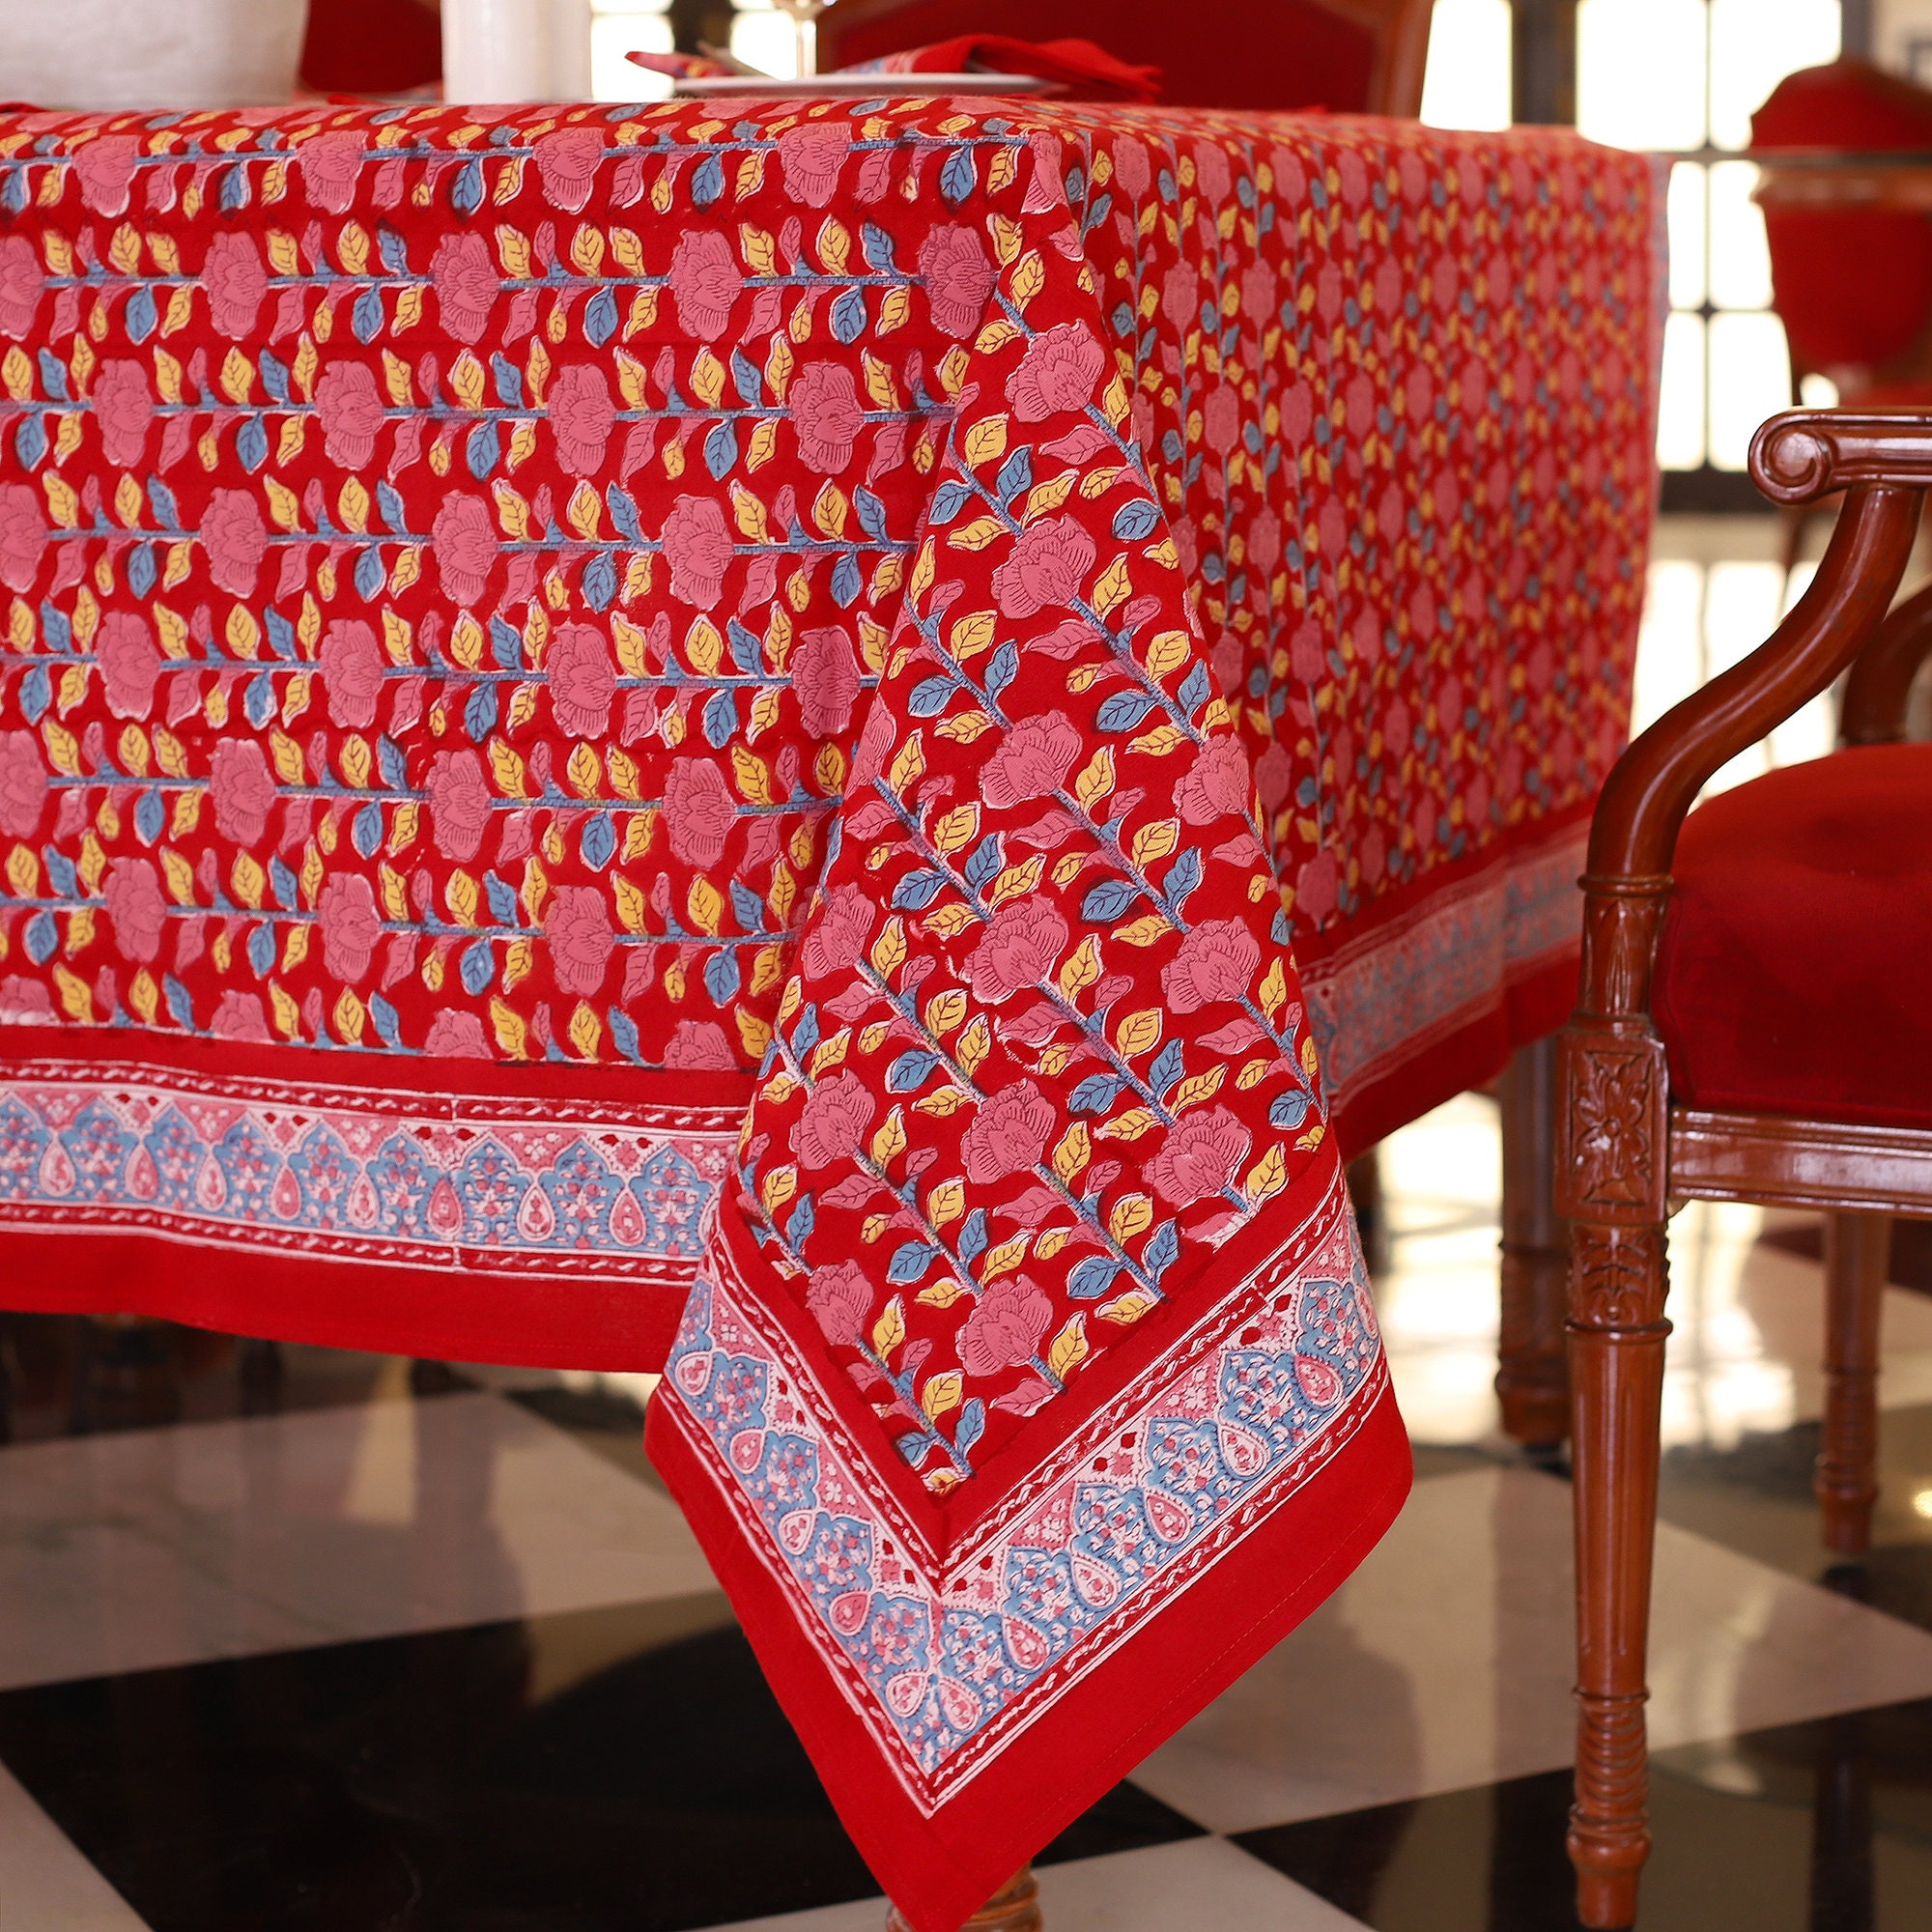 India Arts Indian Print Mandala Rectangle Cotton tablecloth 88 x 58 Red